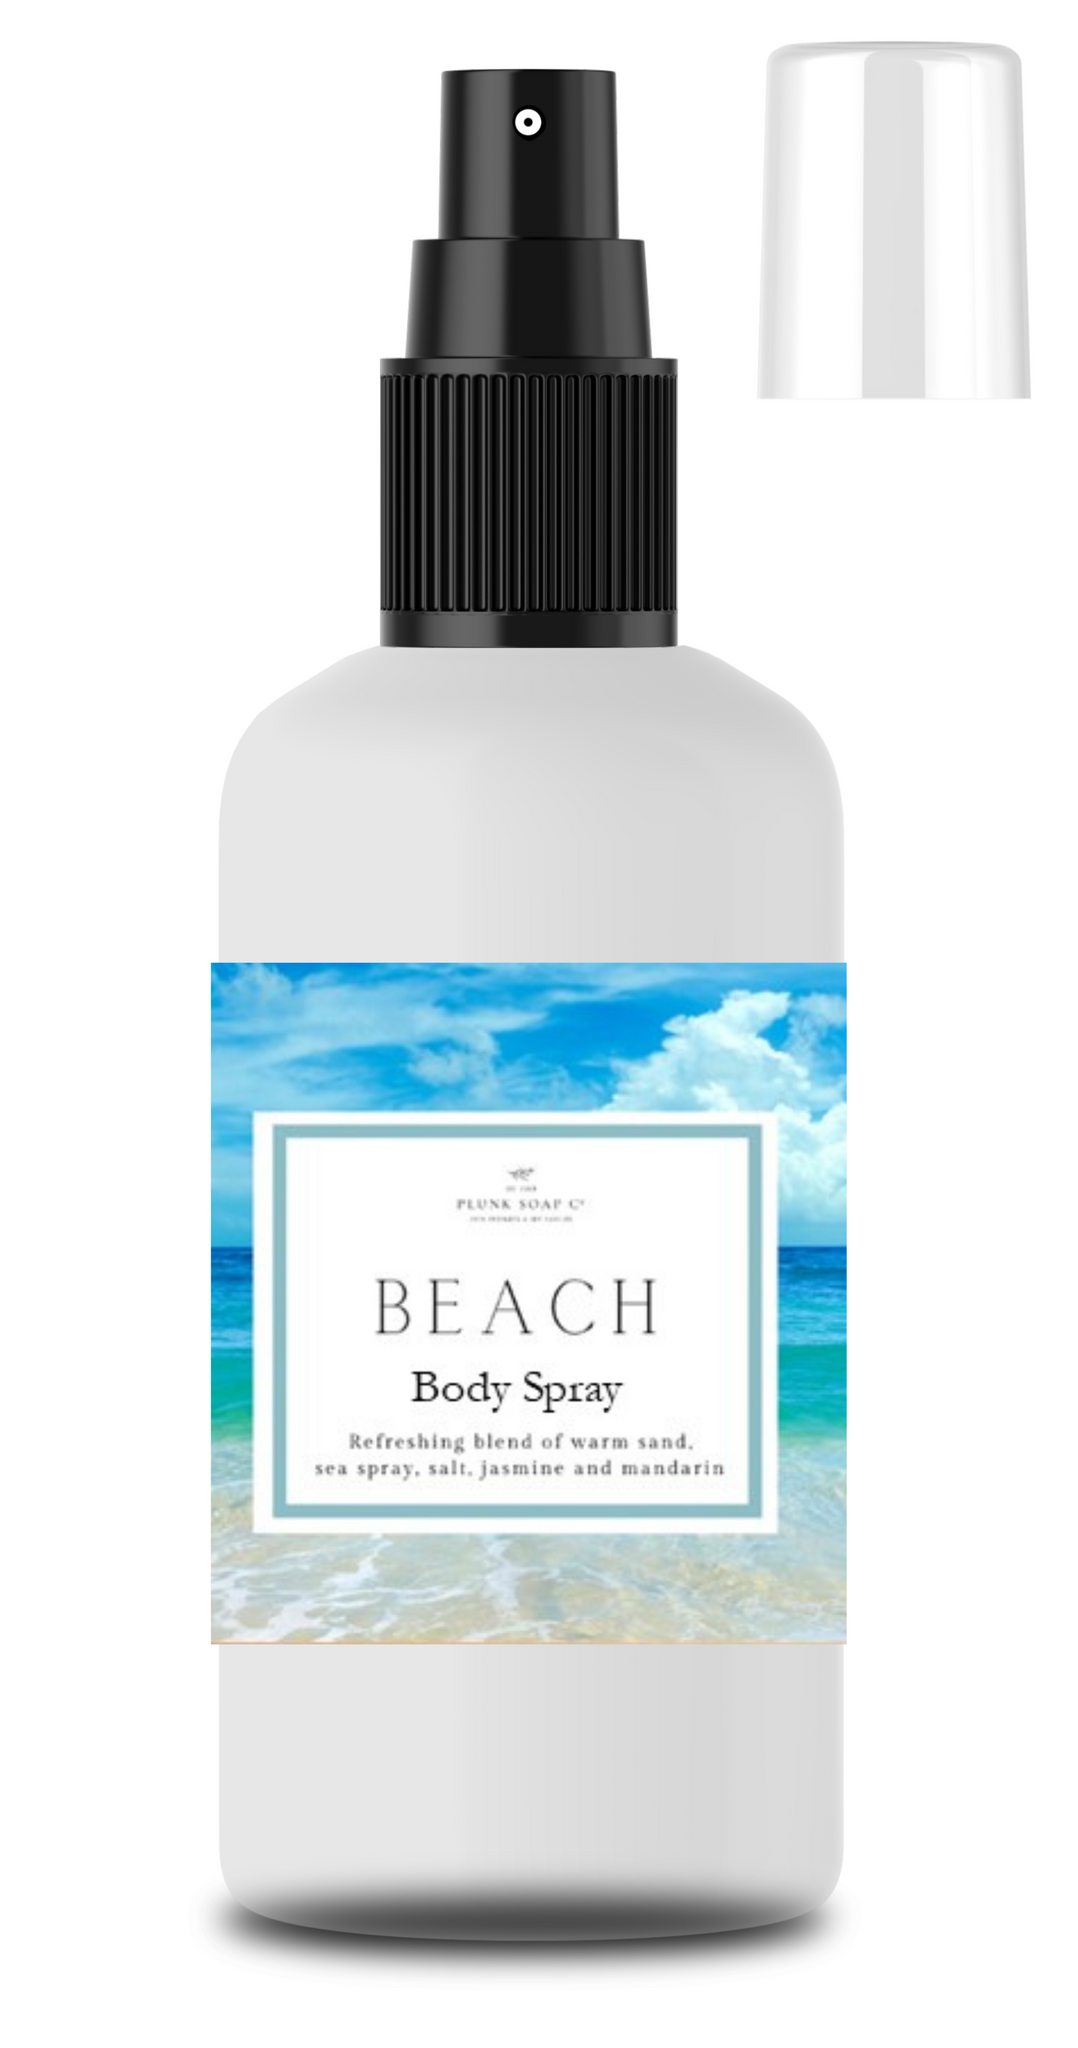 Beach scented body spray